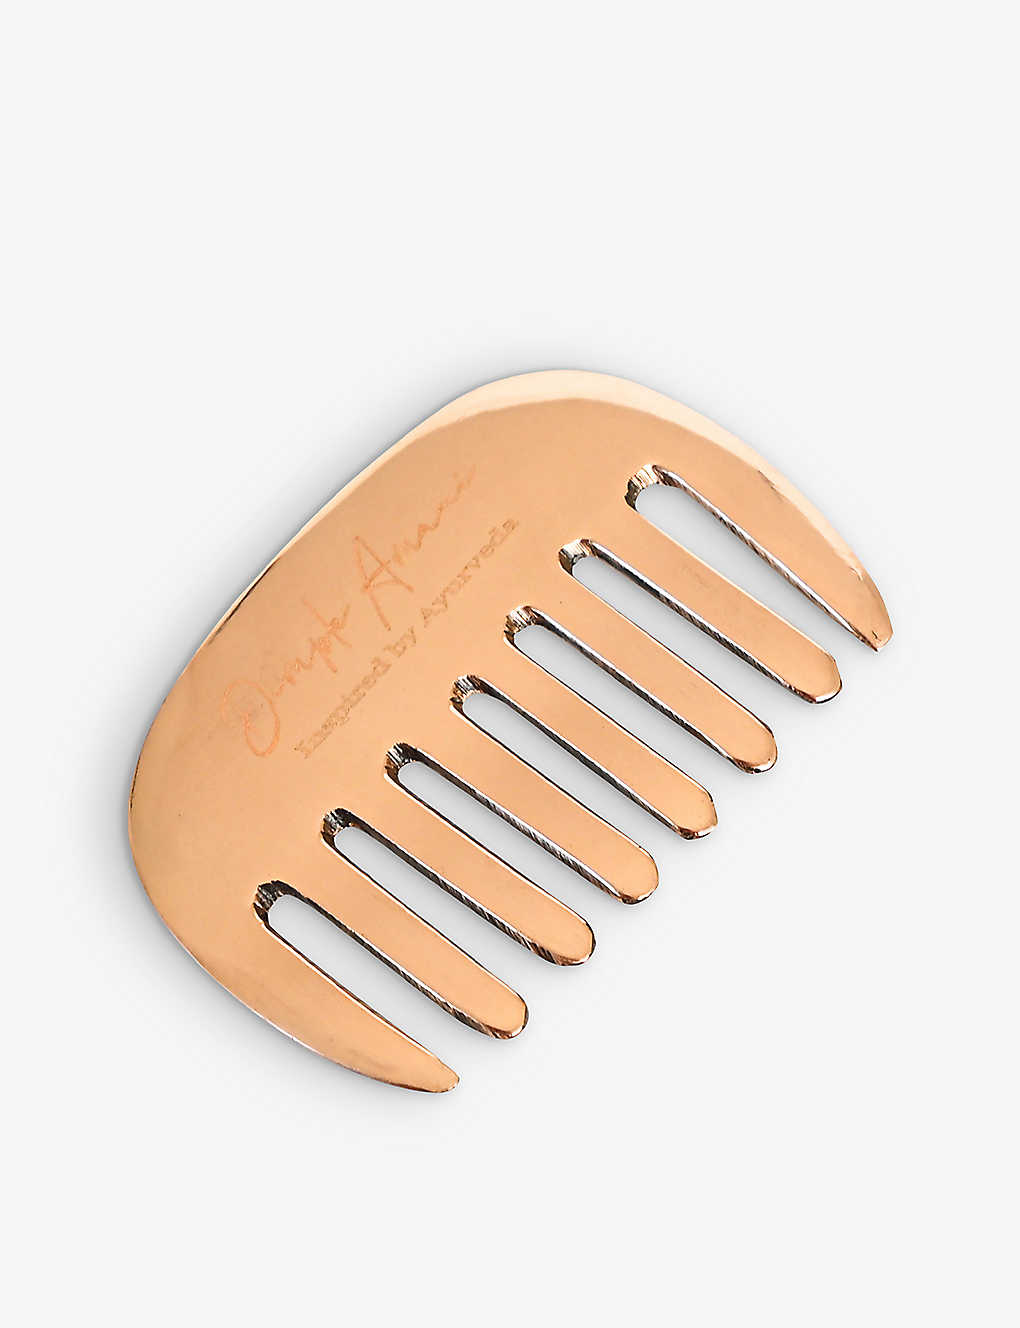 Dimple Amani Metallic Copper Scalp Comb